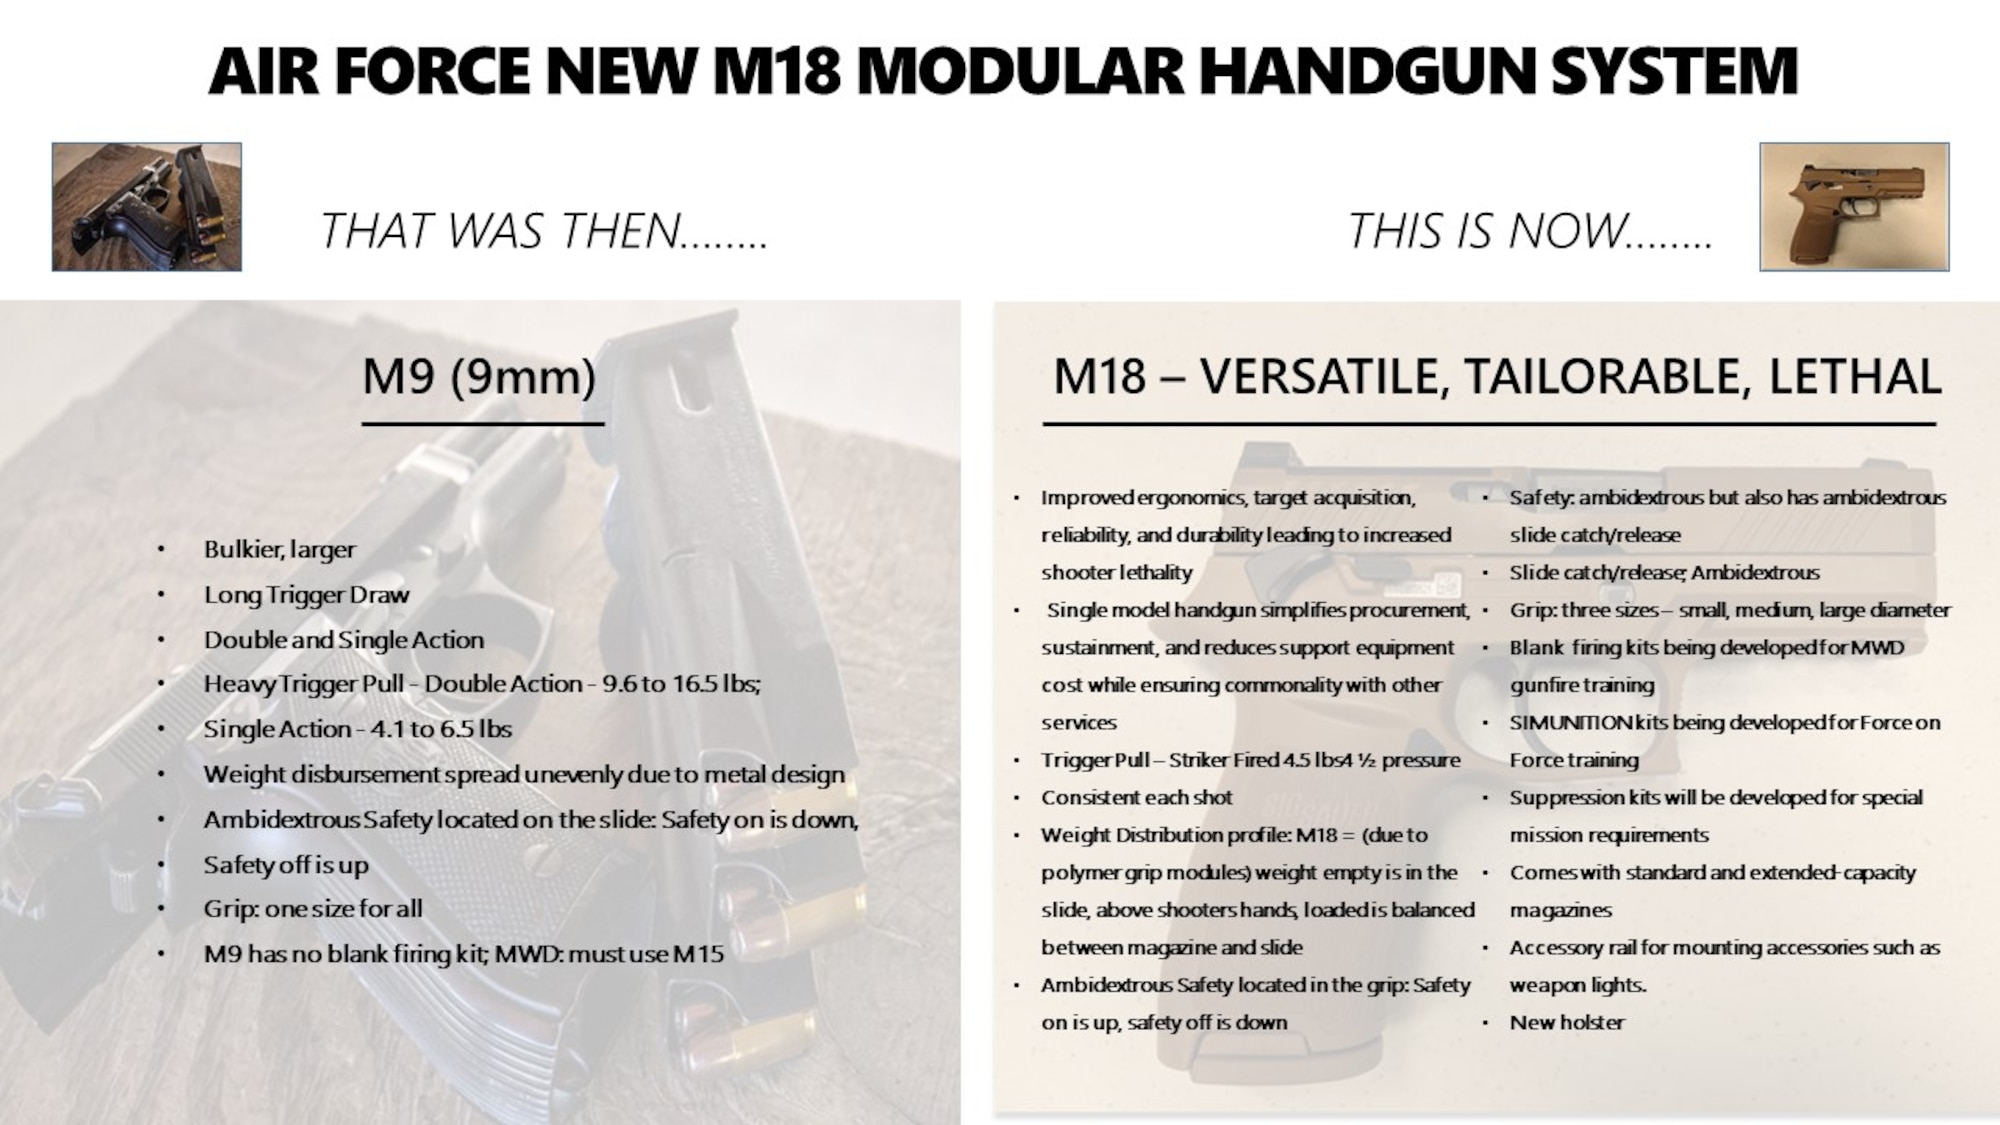 Comparison of M9 and M18 handguns